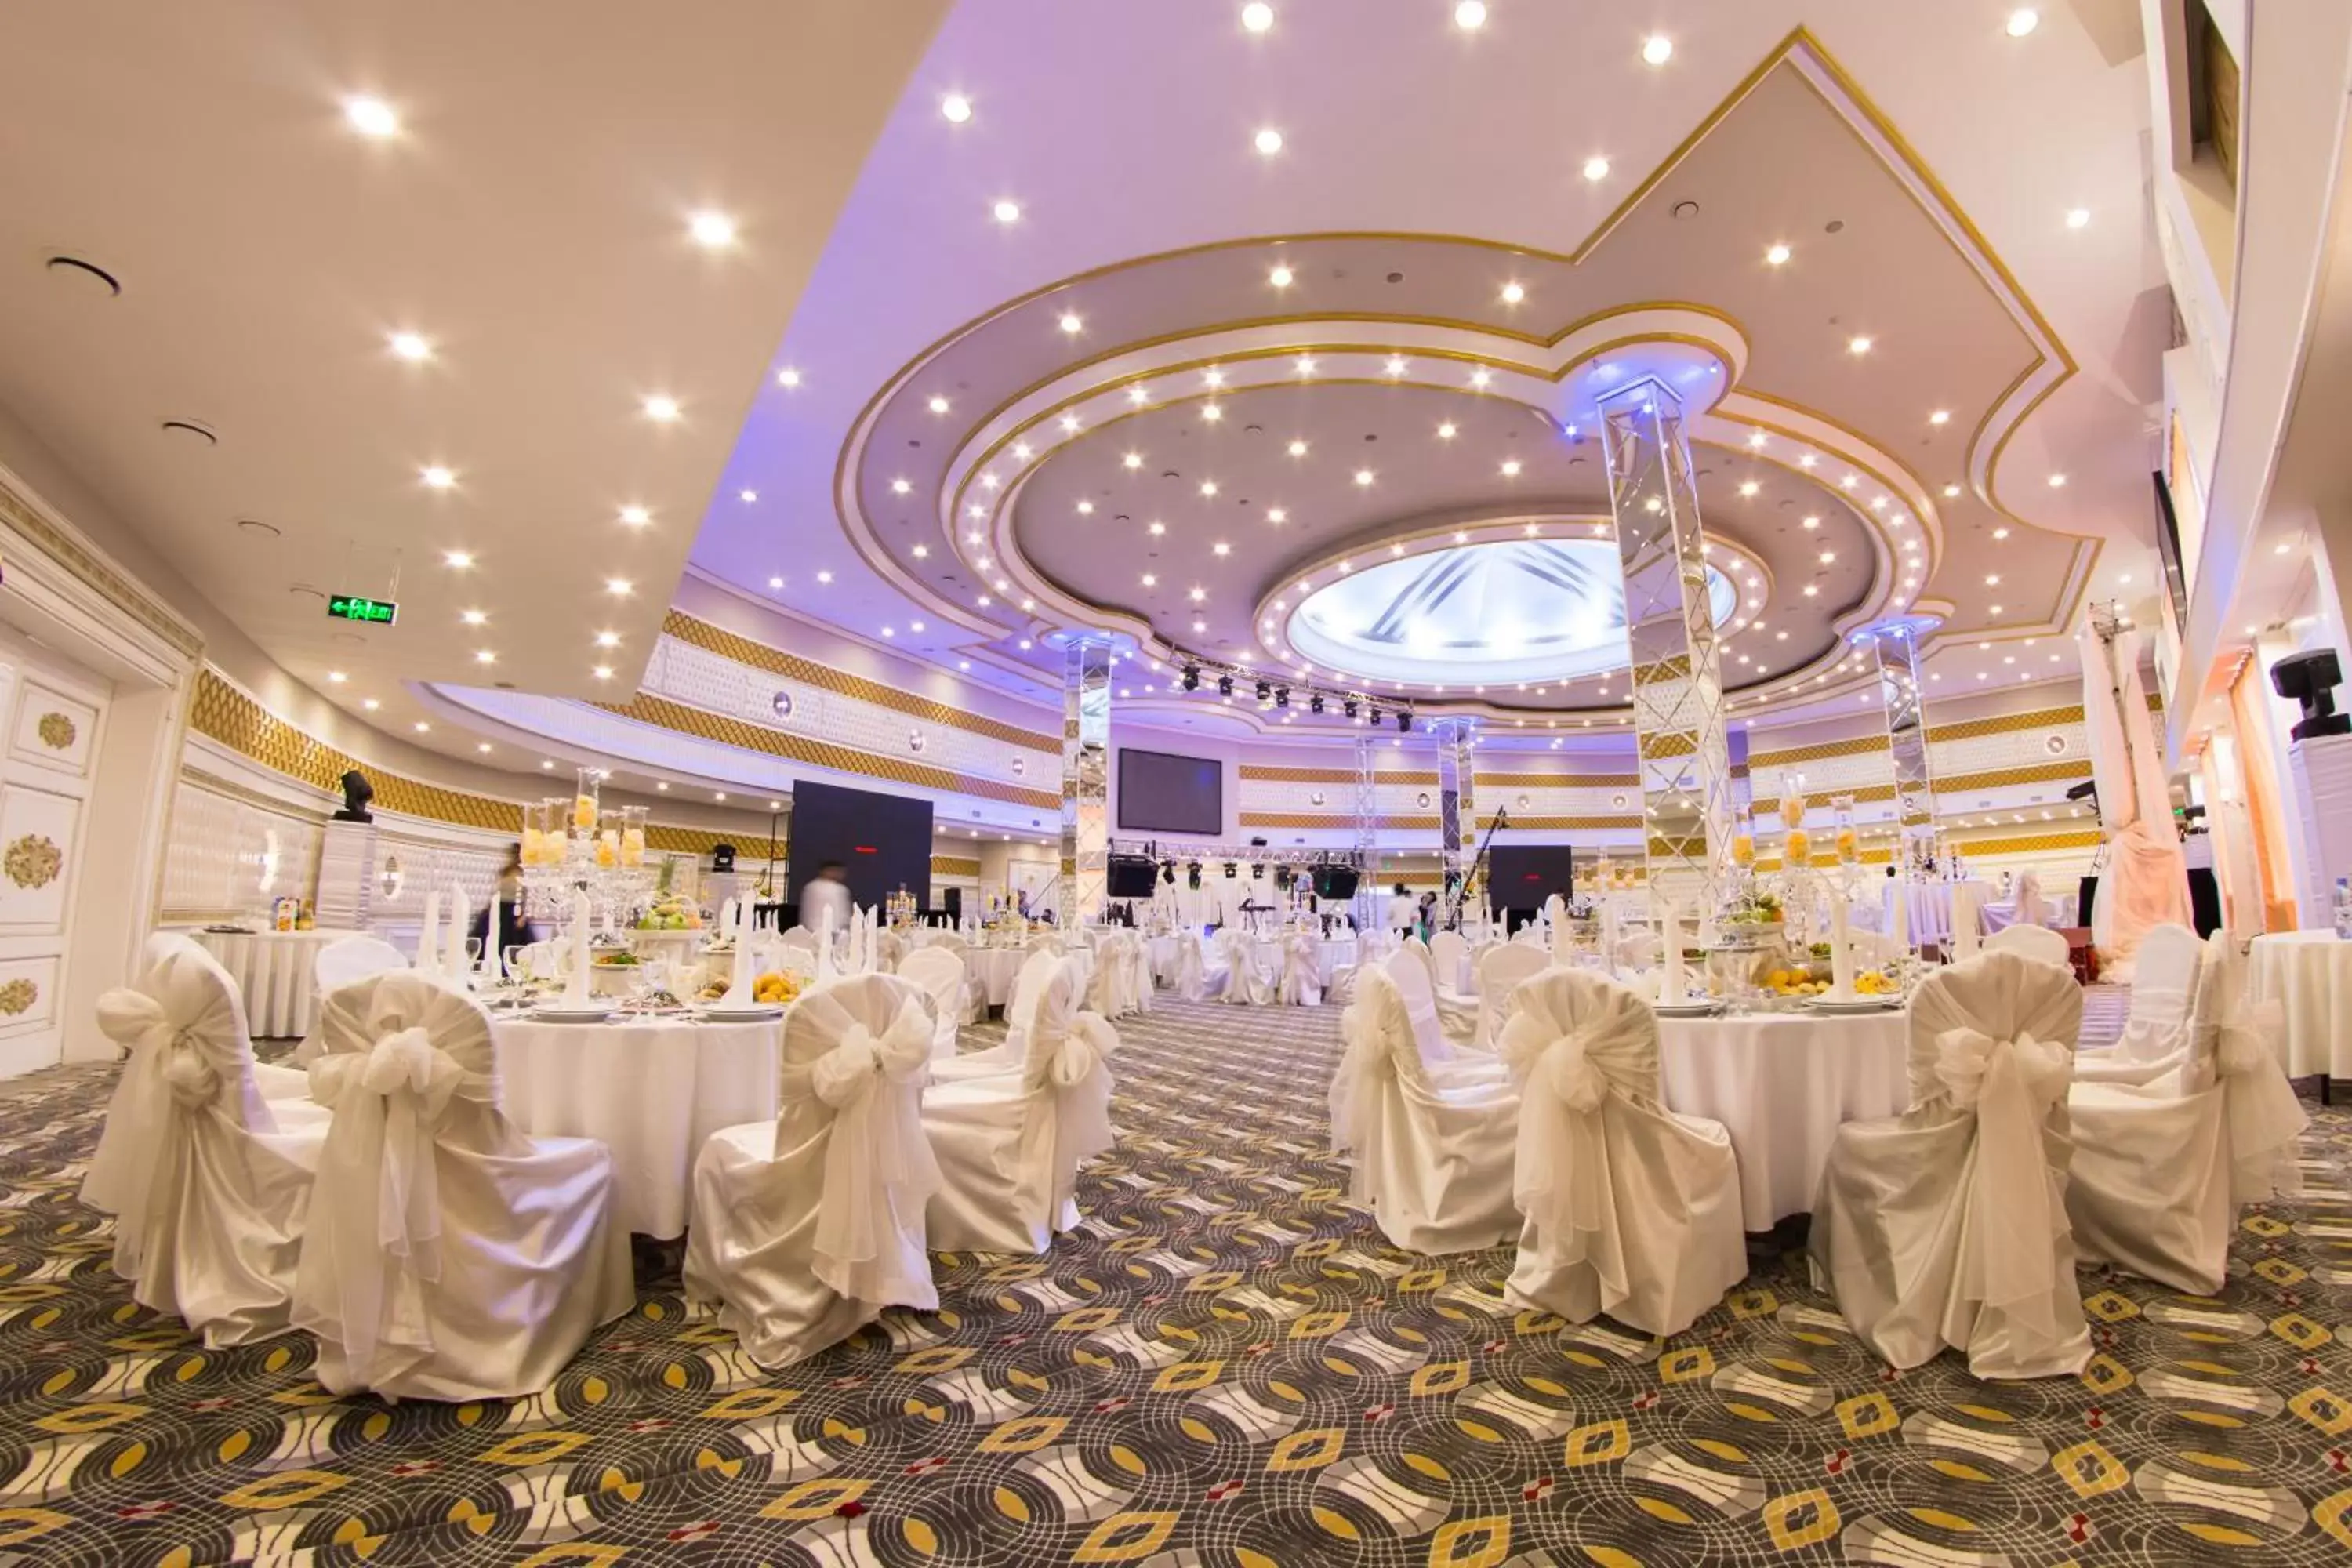 Banquet/Function facilities, Banquet Facilities in Kazakhstan Hotel